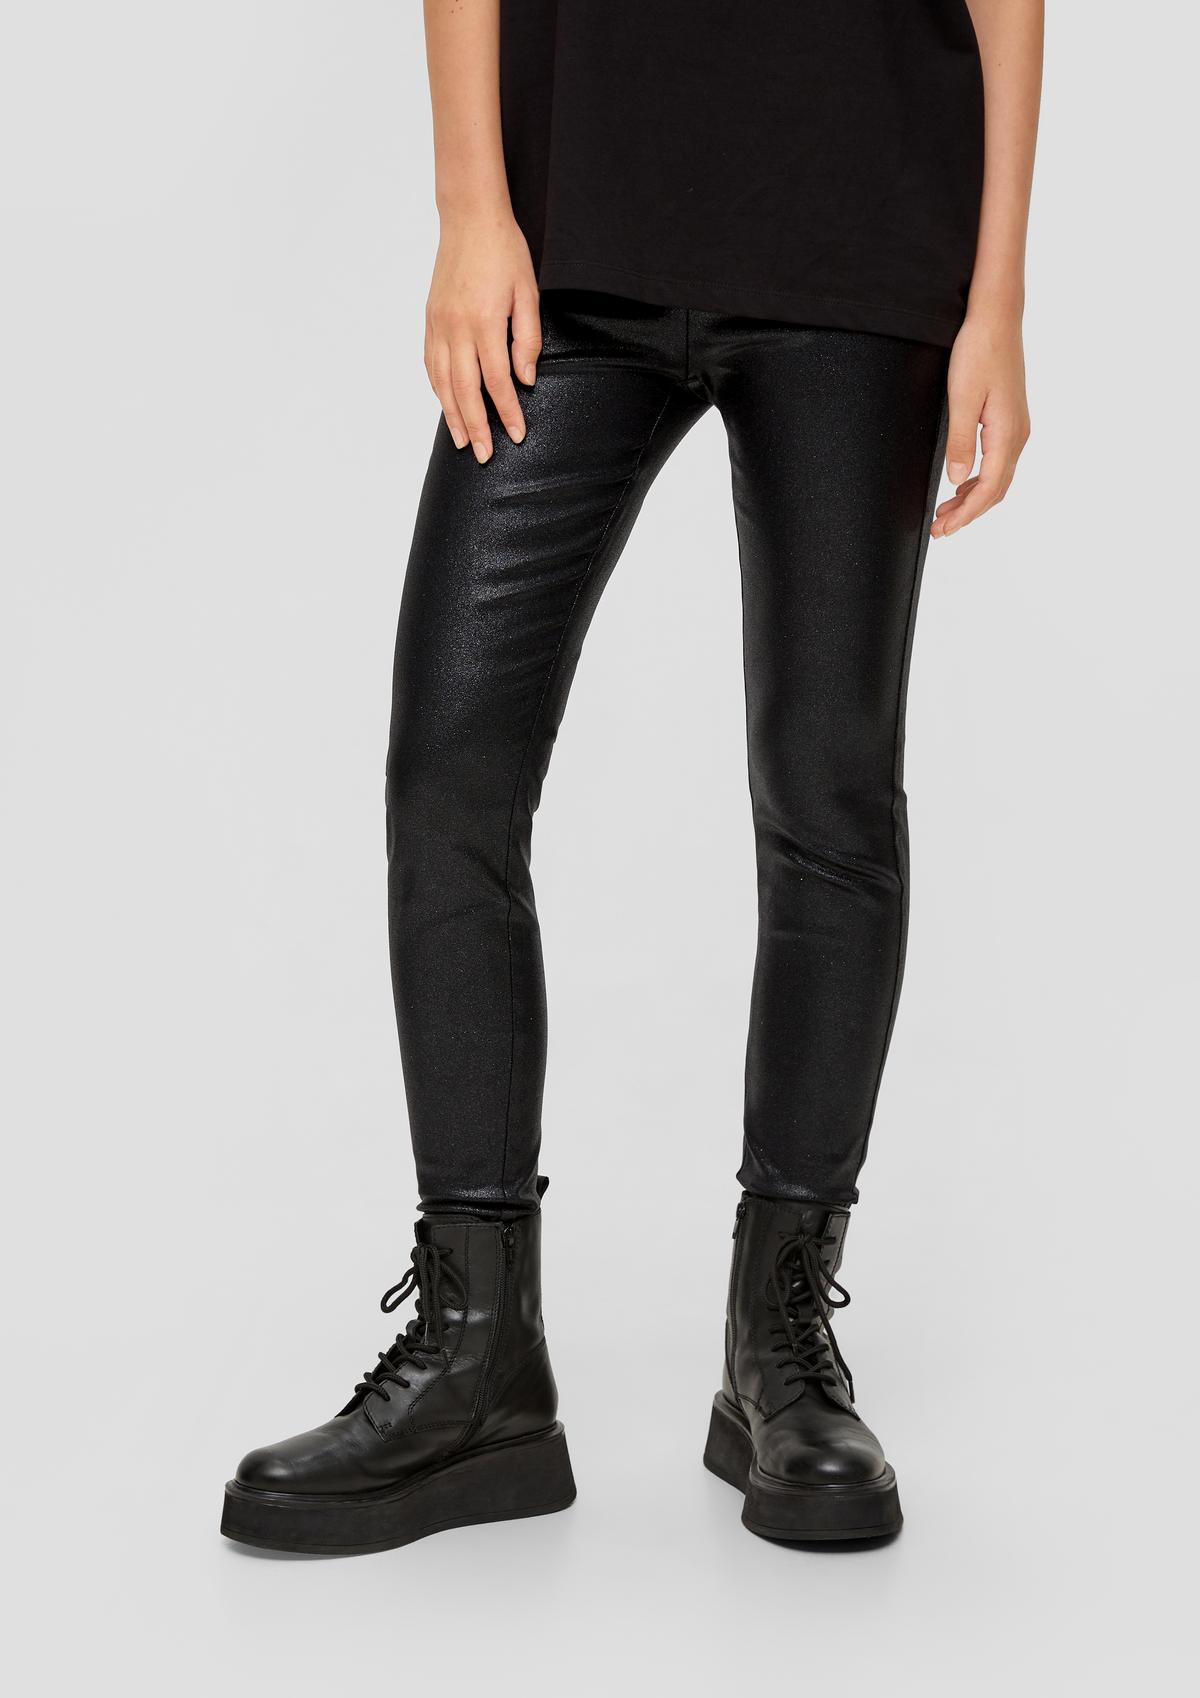 | - QS black design a leggings fit: glittery x in Elif Slim